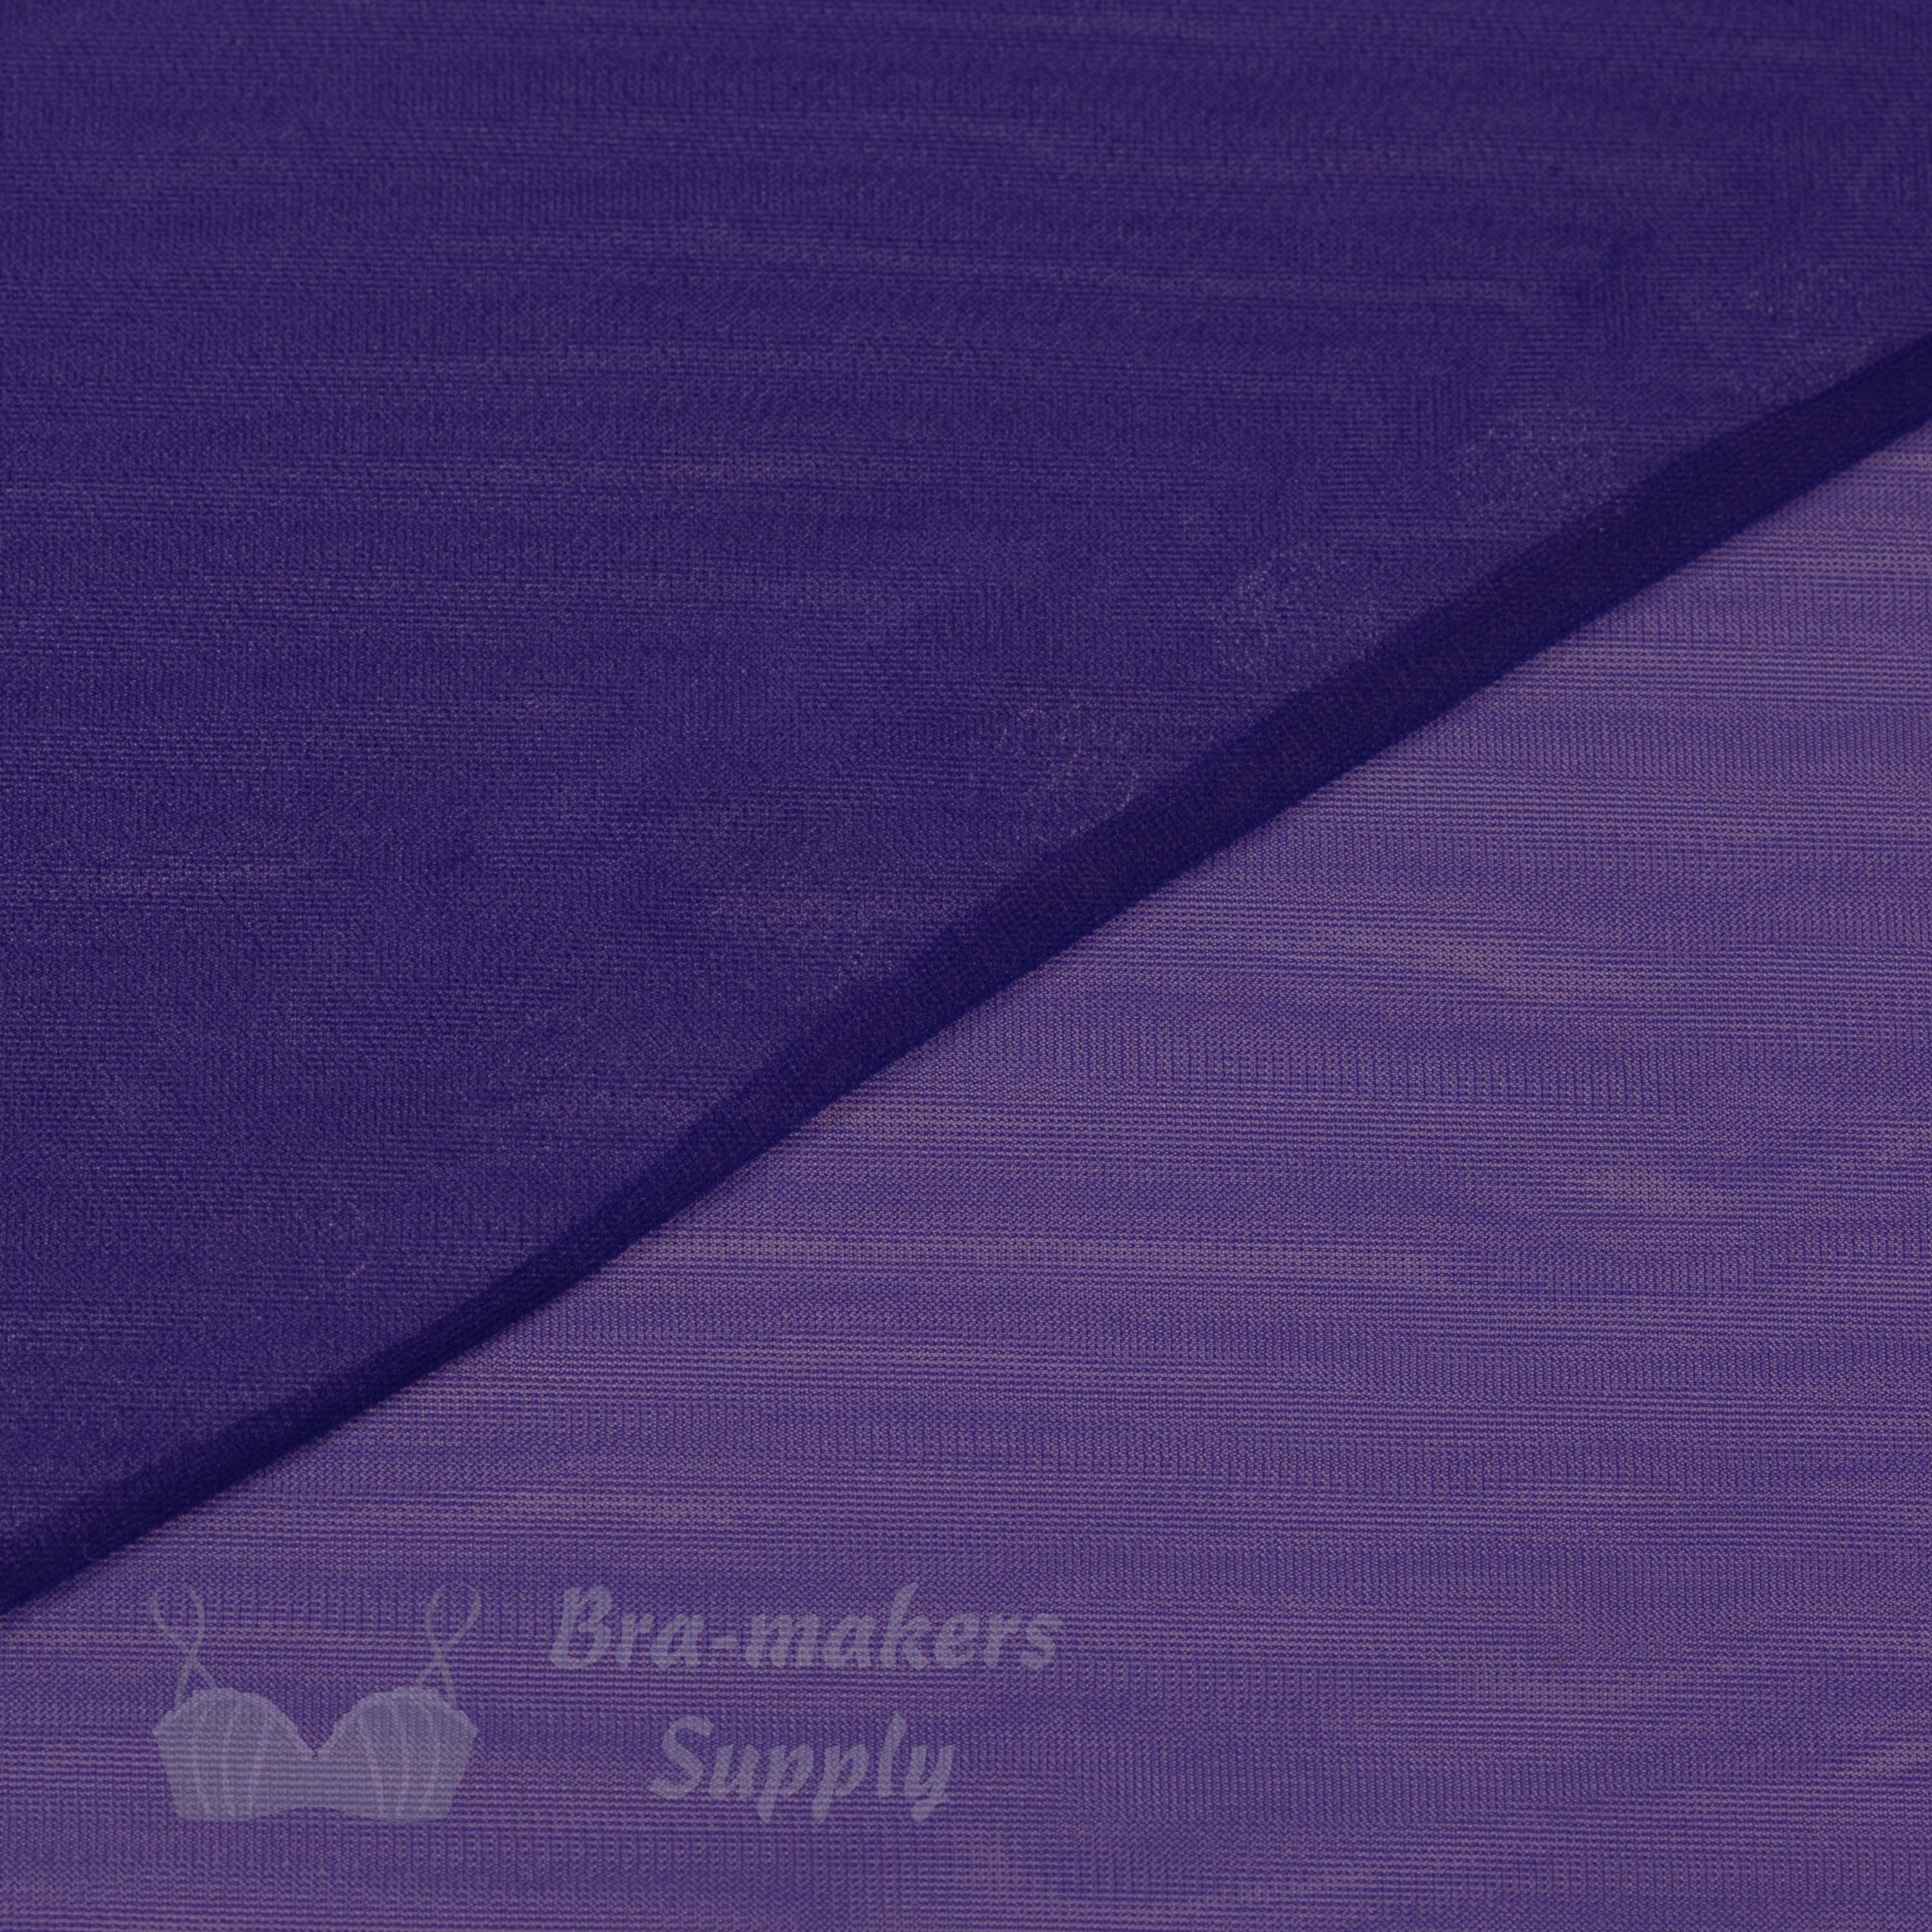 15 denier sheer nylon fabric FL-15 purple from Bra-Makers Supply folded shown